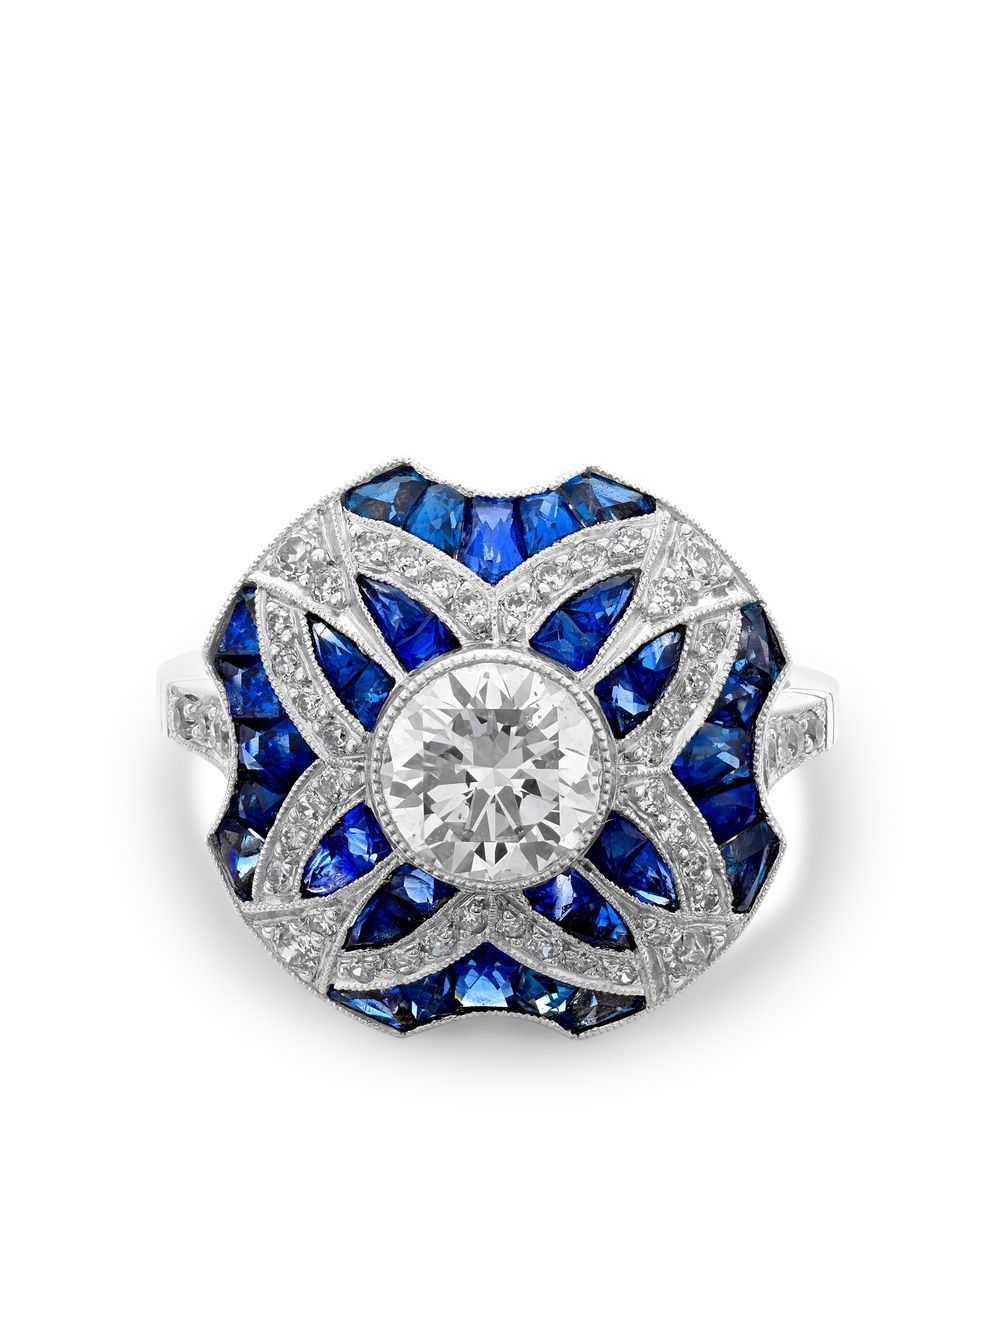 platinum Art Deco diamond and sapphire cocktail ring